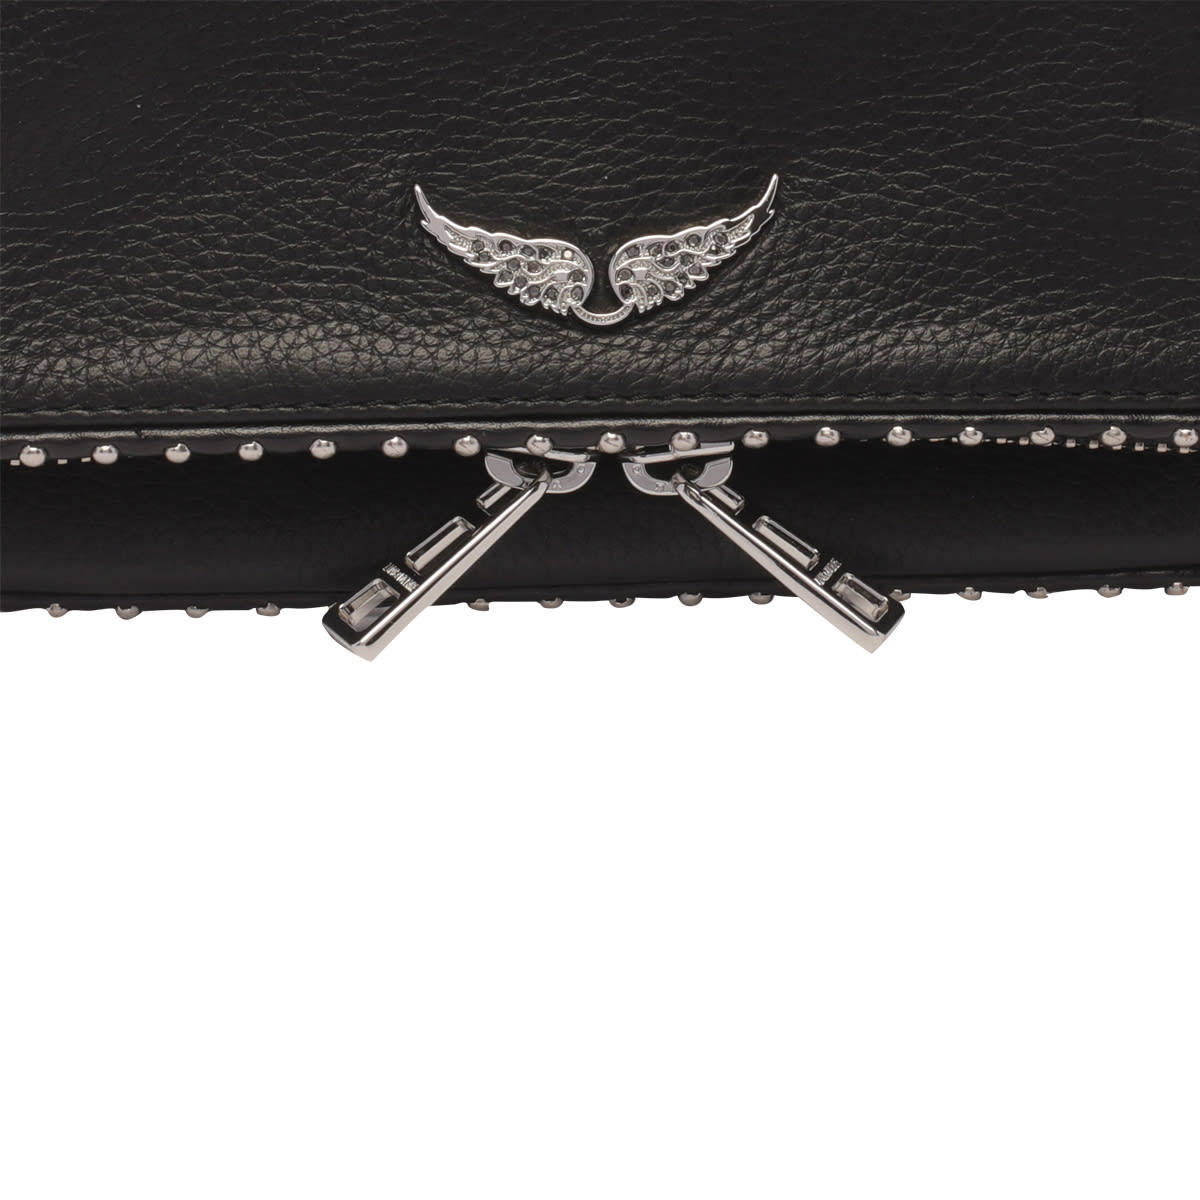 Zadig & Voltaire Rock Star noir purse